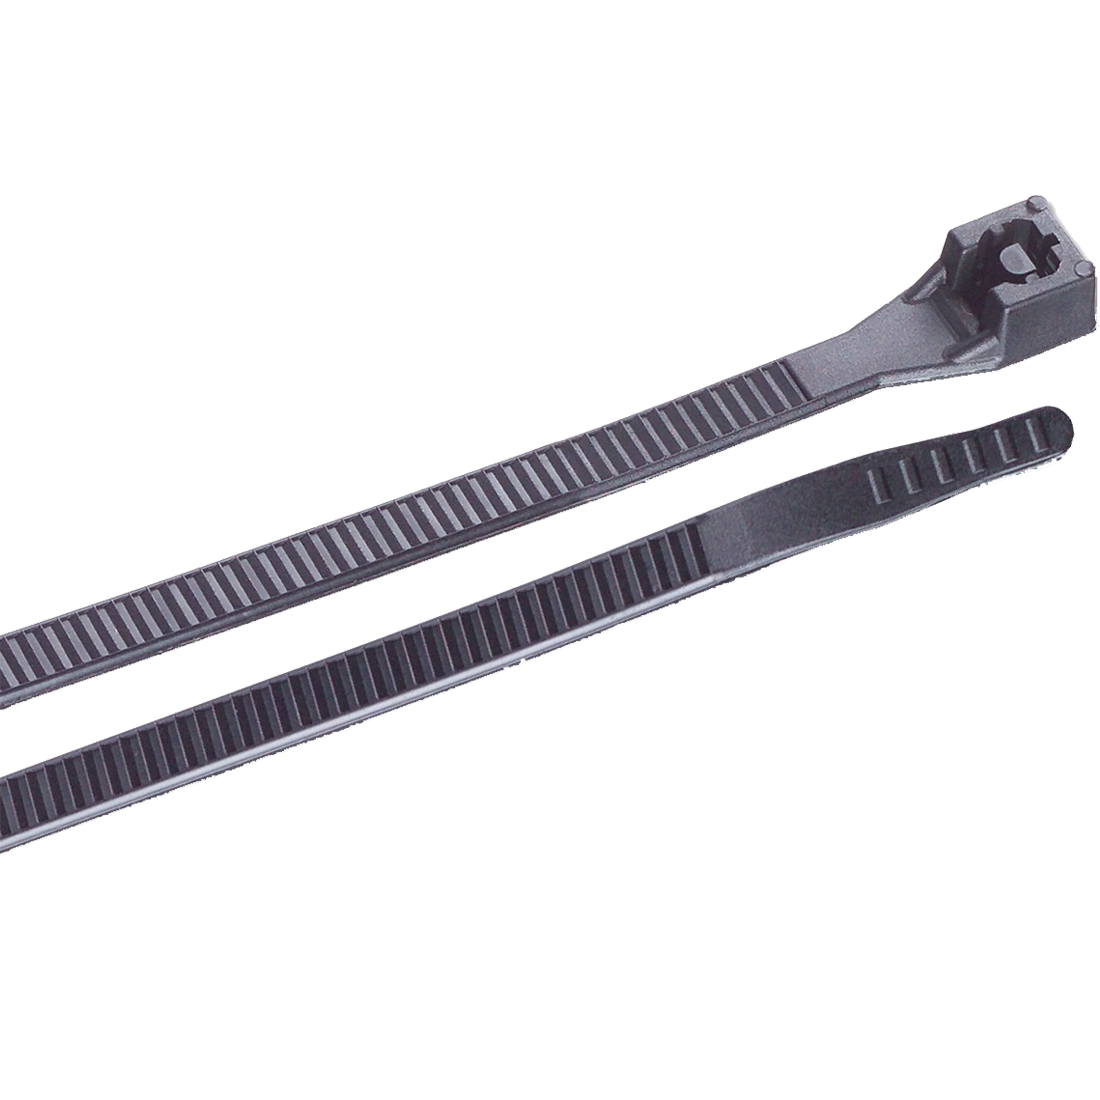 Ancor 14" UV Black Standard Cable Zip Ties - 100 Pack [199215]